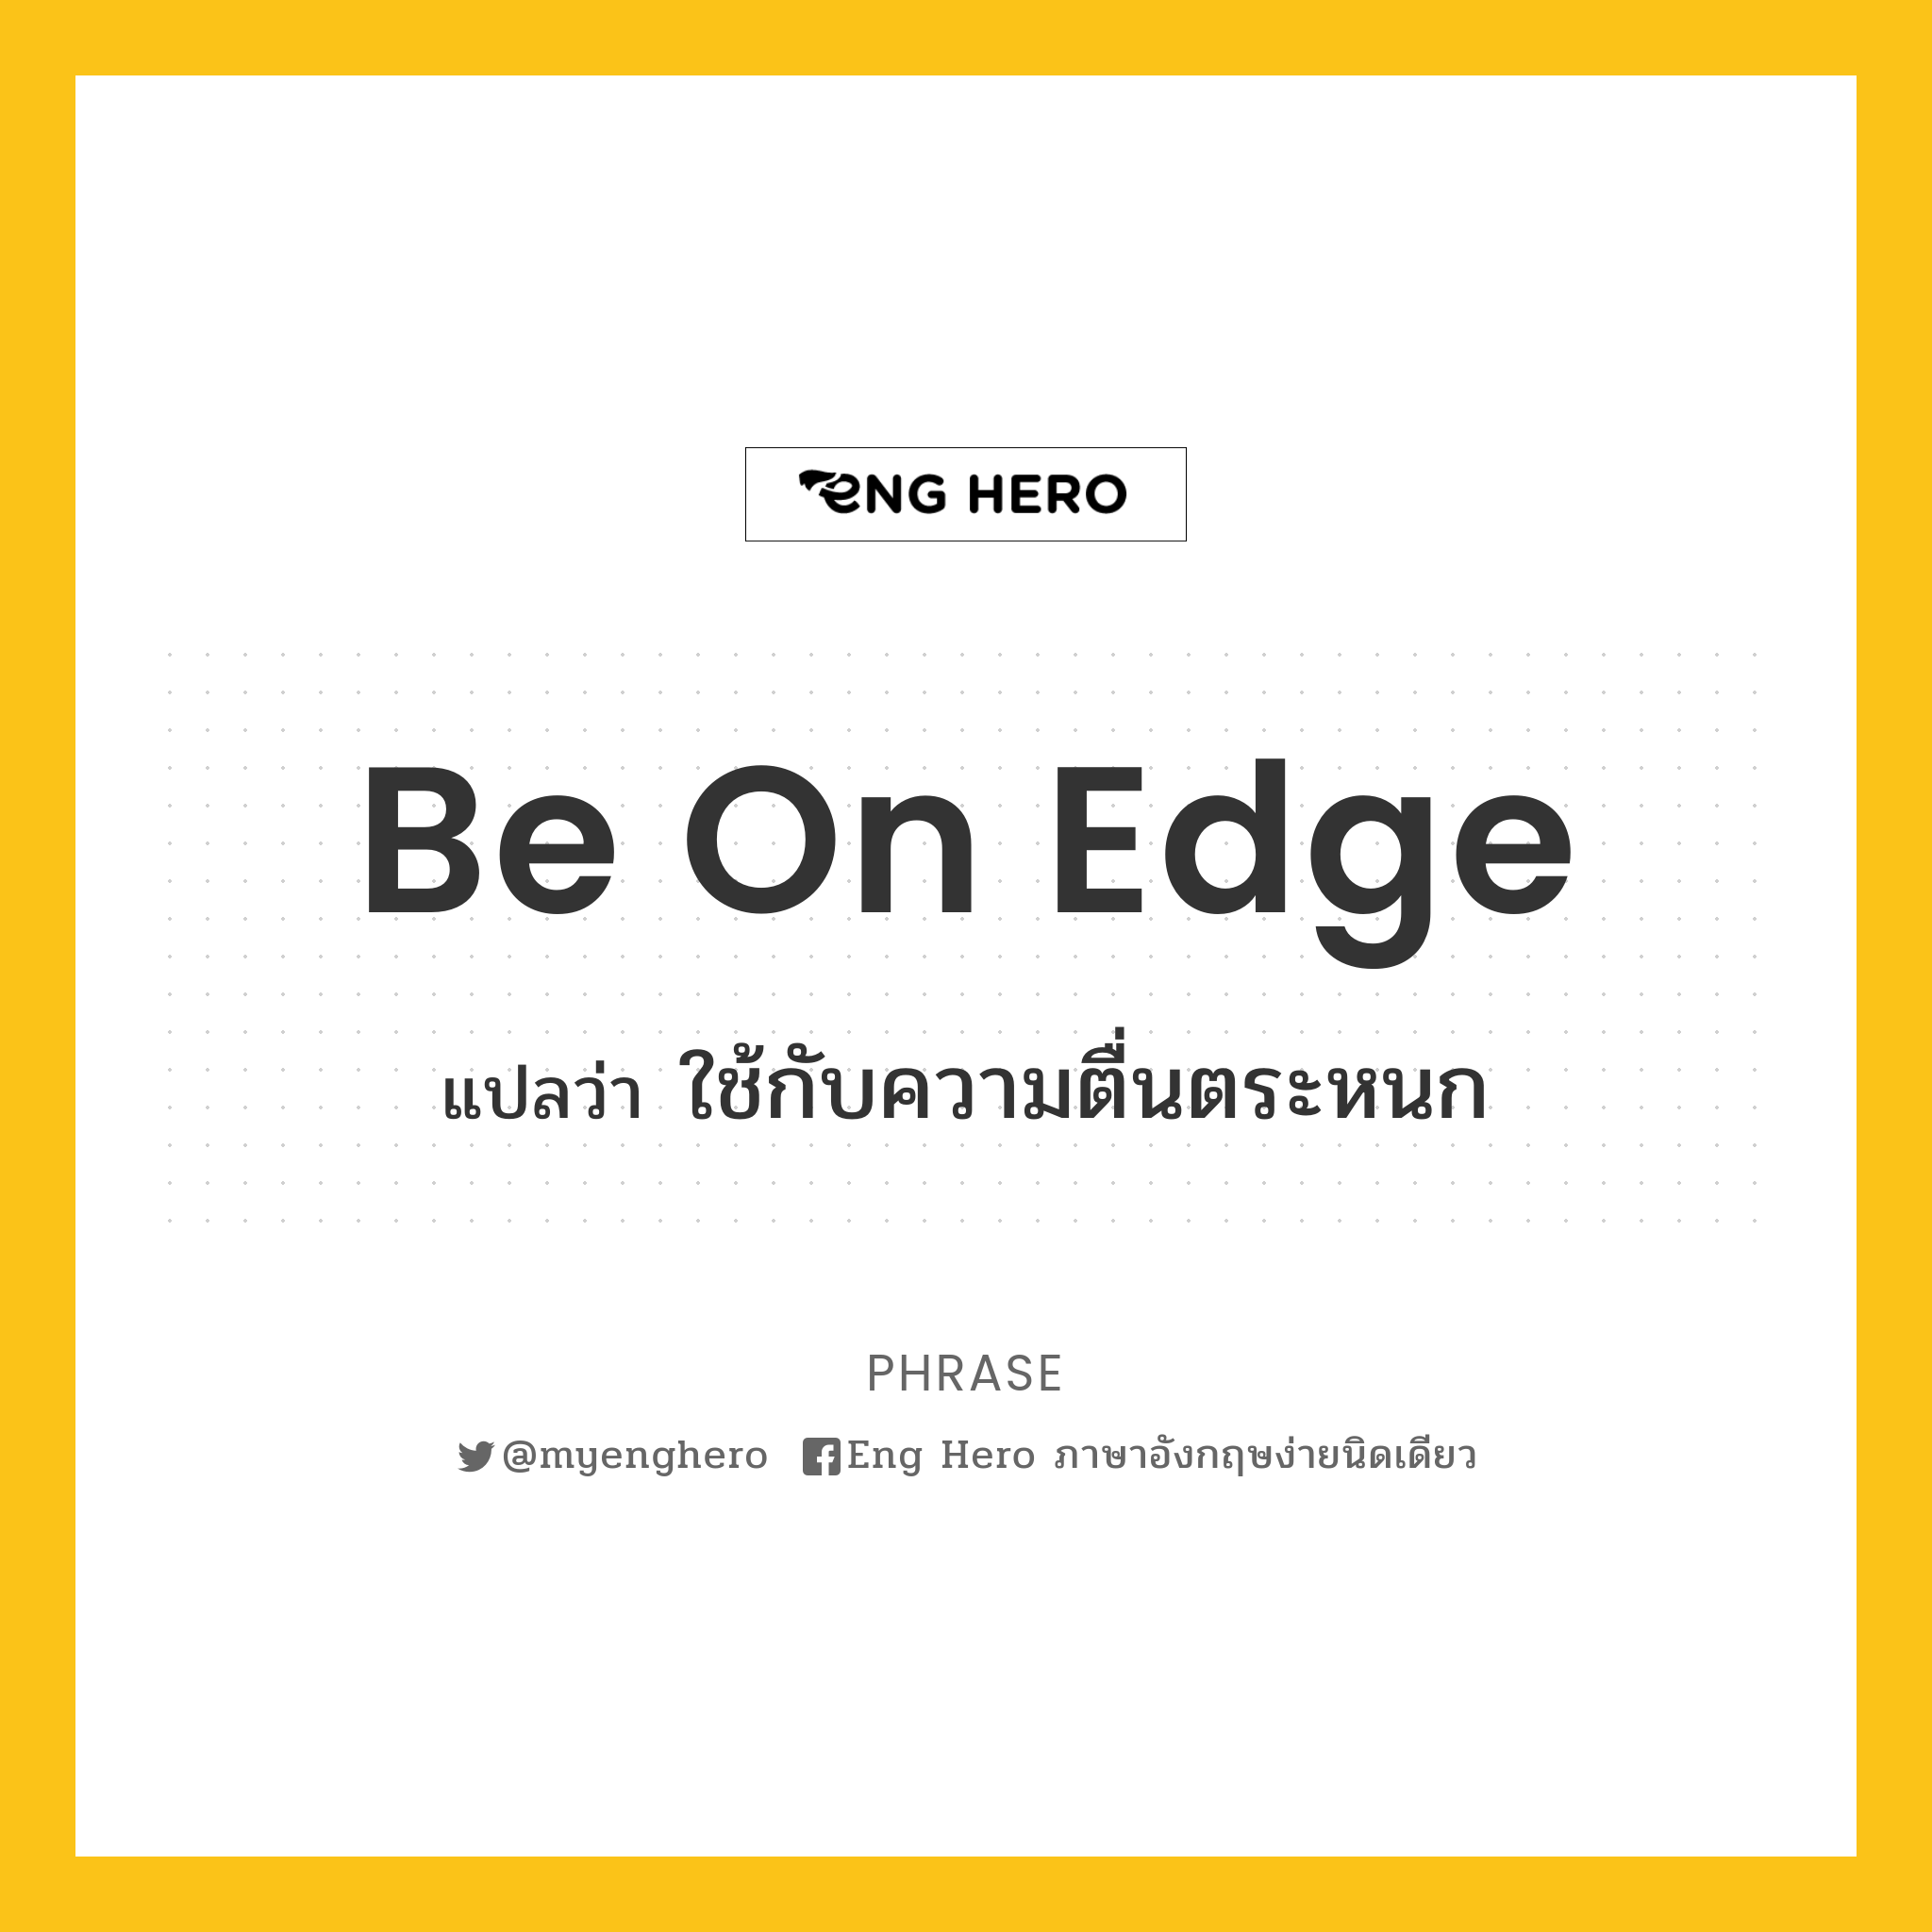 Be on edge